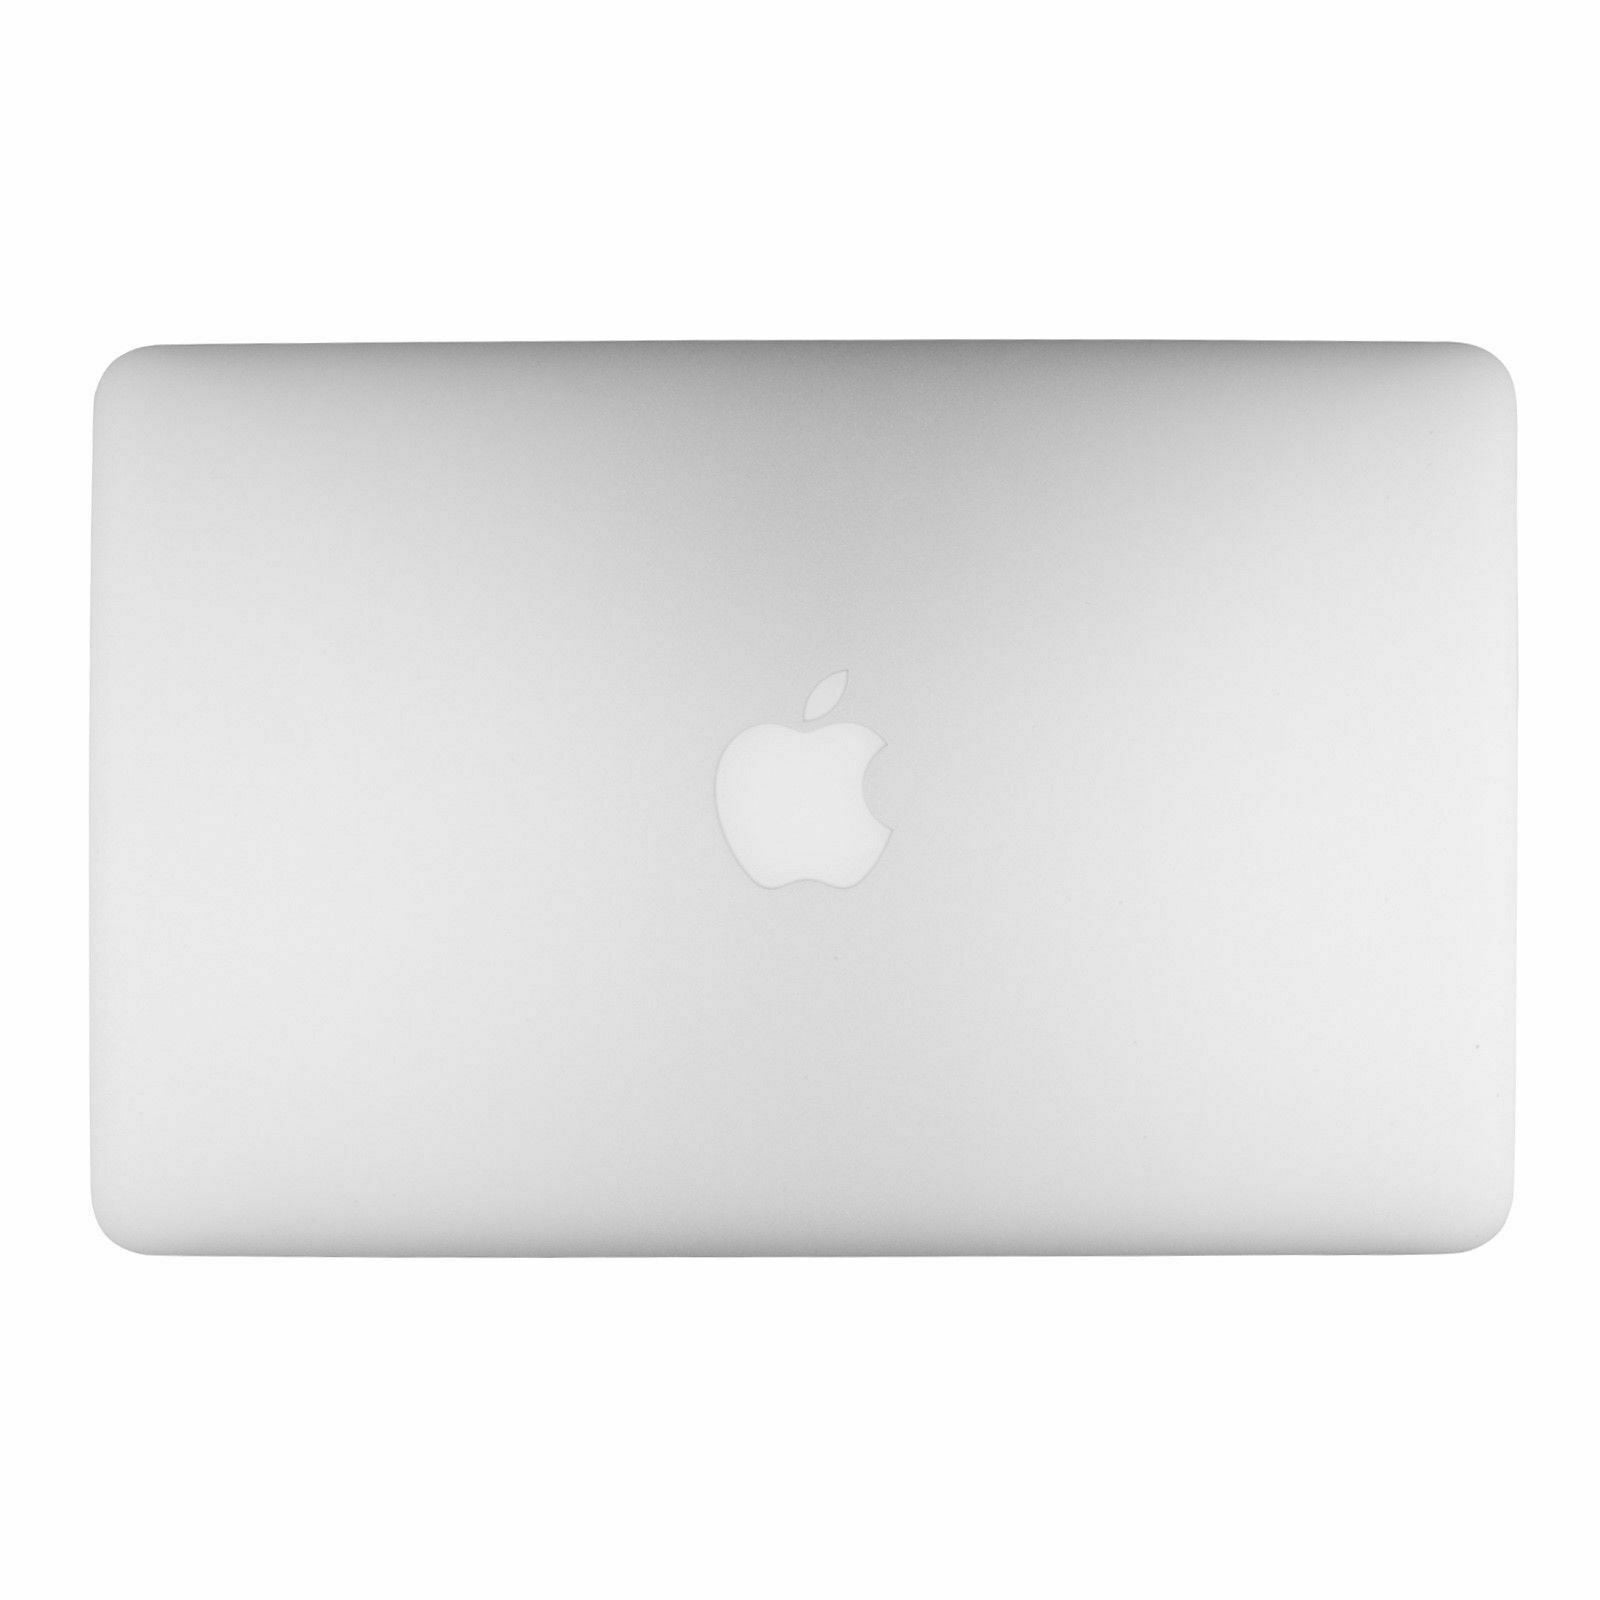  Apple MacBook Air MJVM2LL/A 11.6-Inch Laptop (1.6 GHz Intel  Core i5, 128 GB Hard Drive, Integrated Intel HD Graphics 6000, Mac OS X  10.10 Yosemite) (Renewed) : Electronics